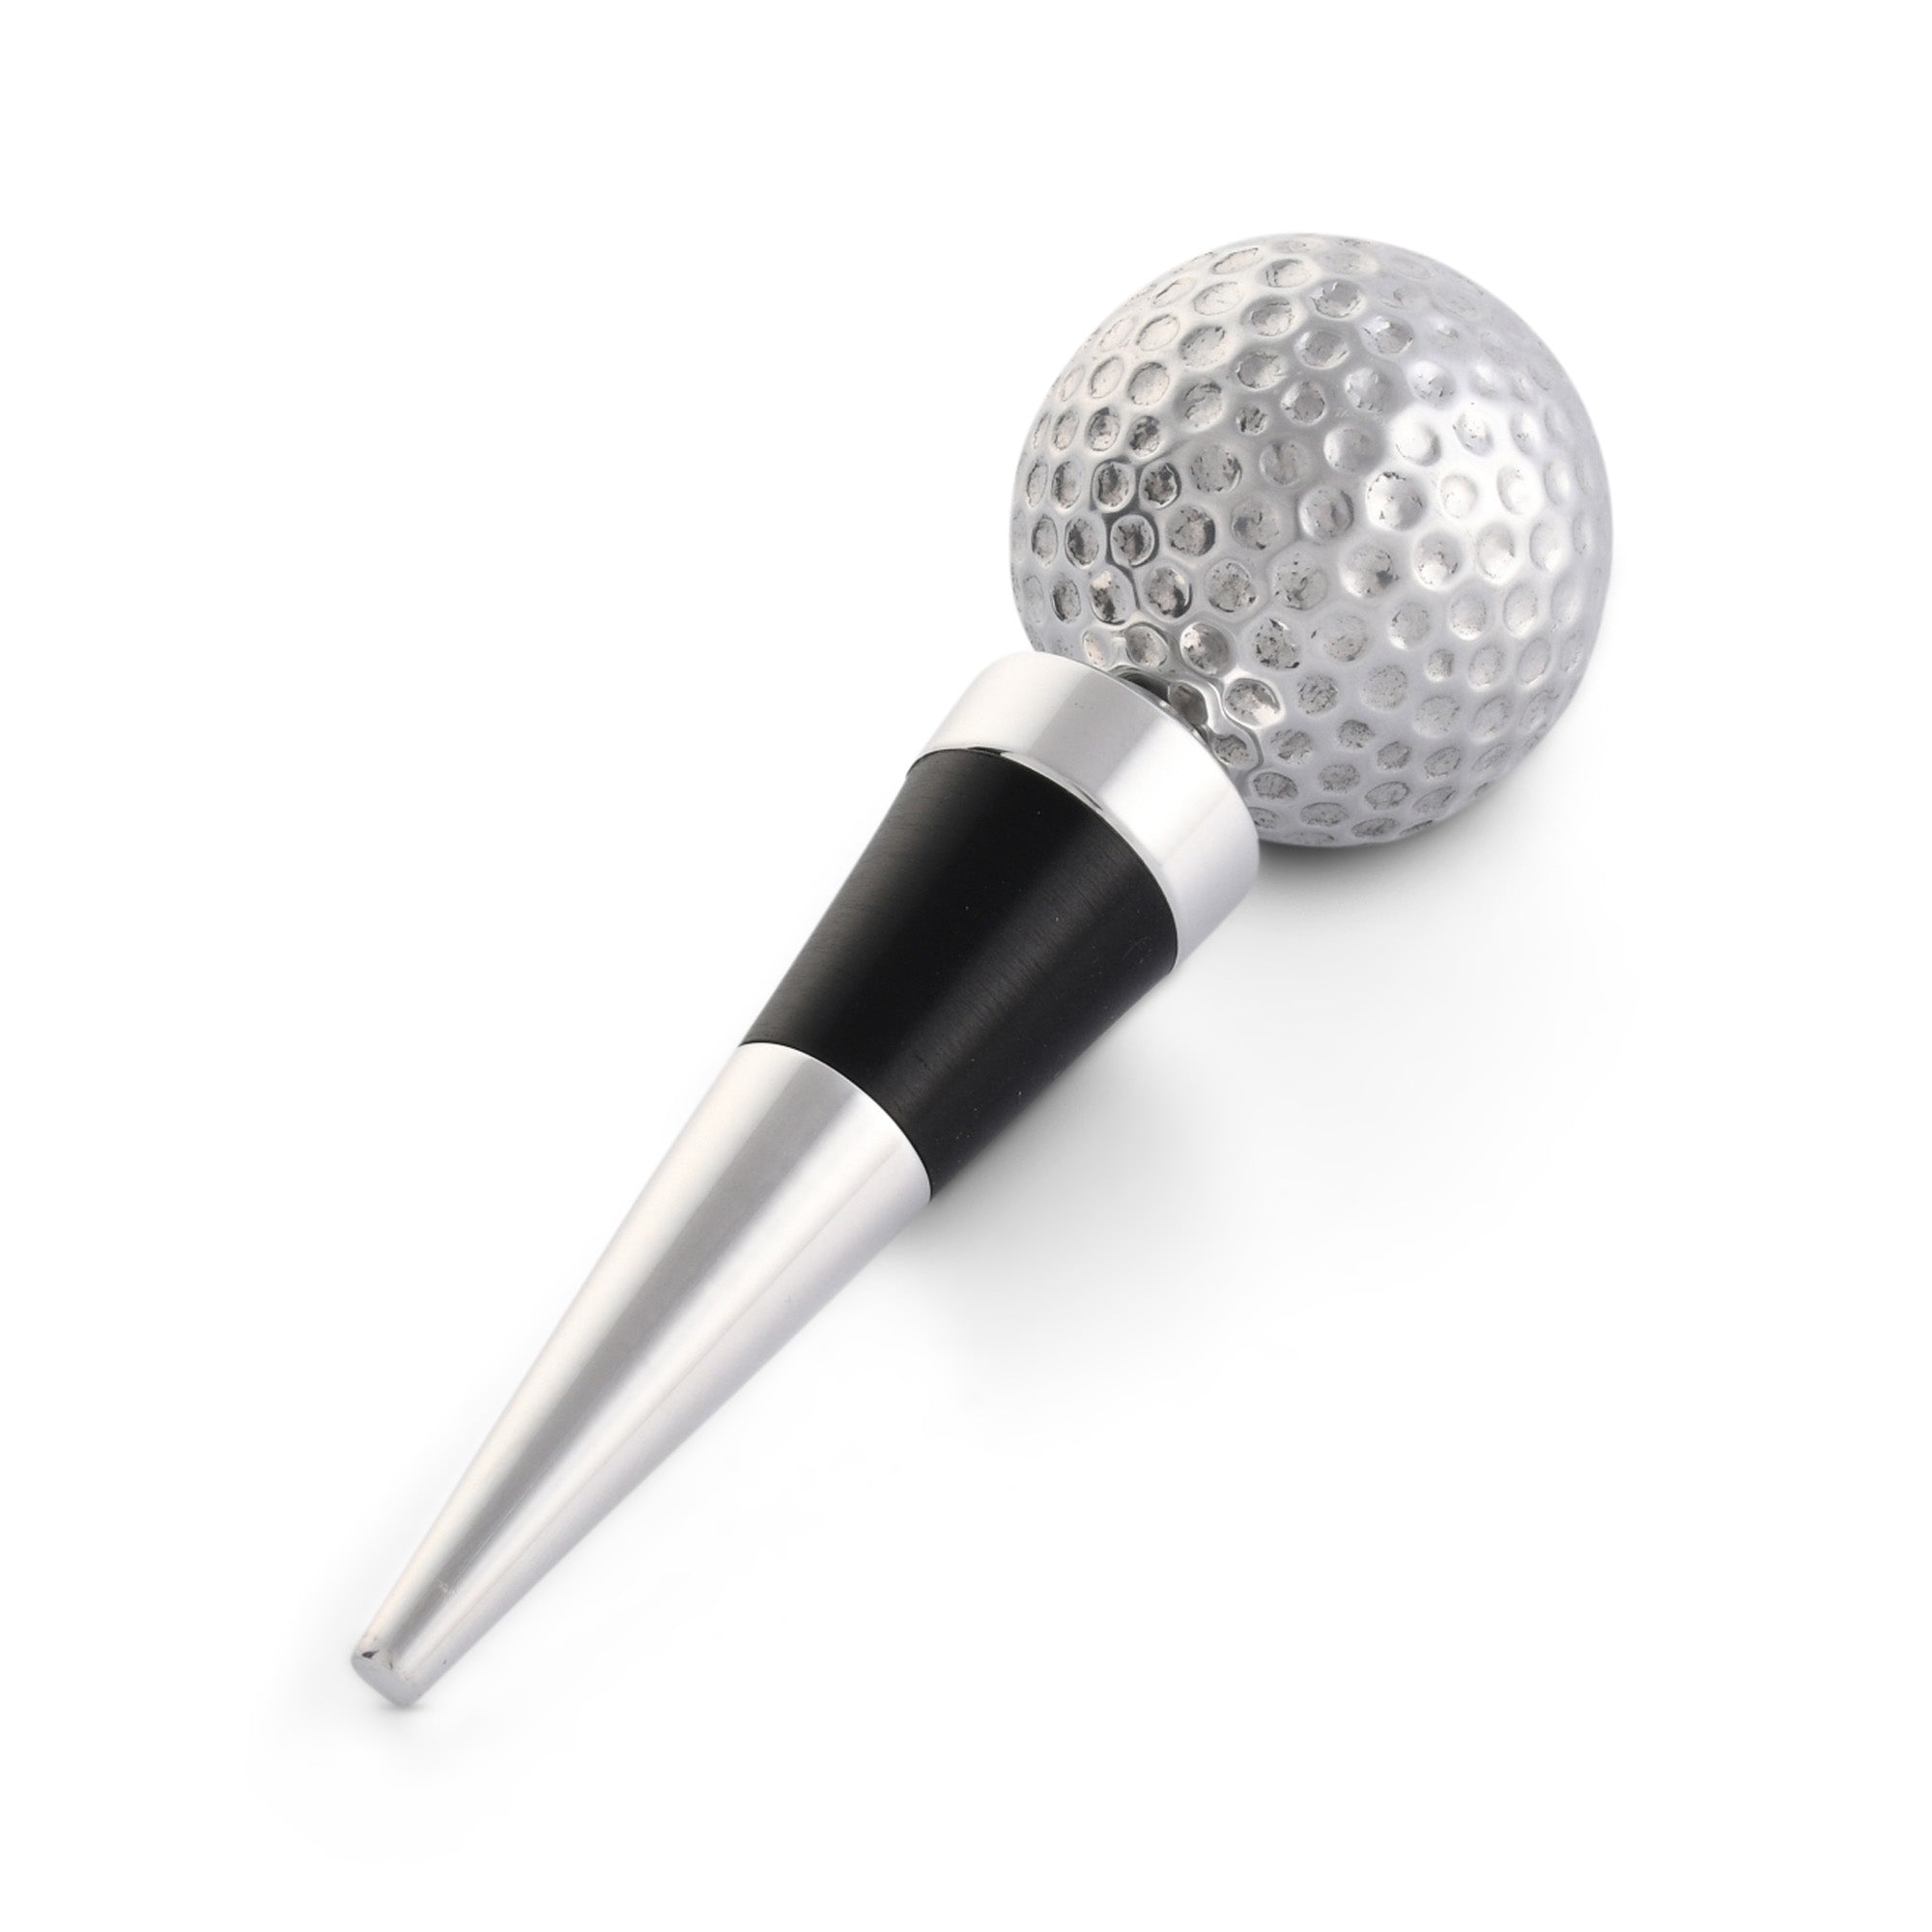 Vagabond House Golf Ball Bottle Stopper Product Image